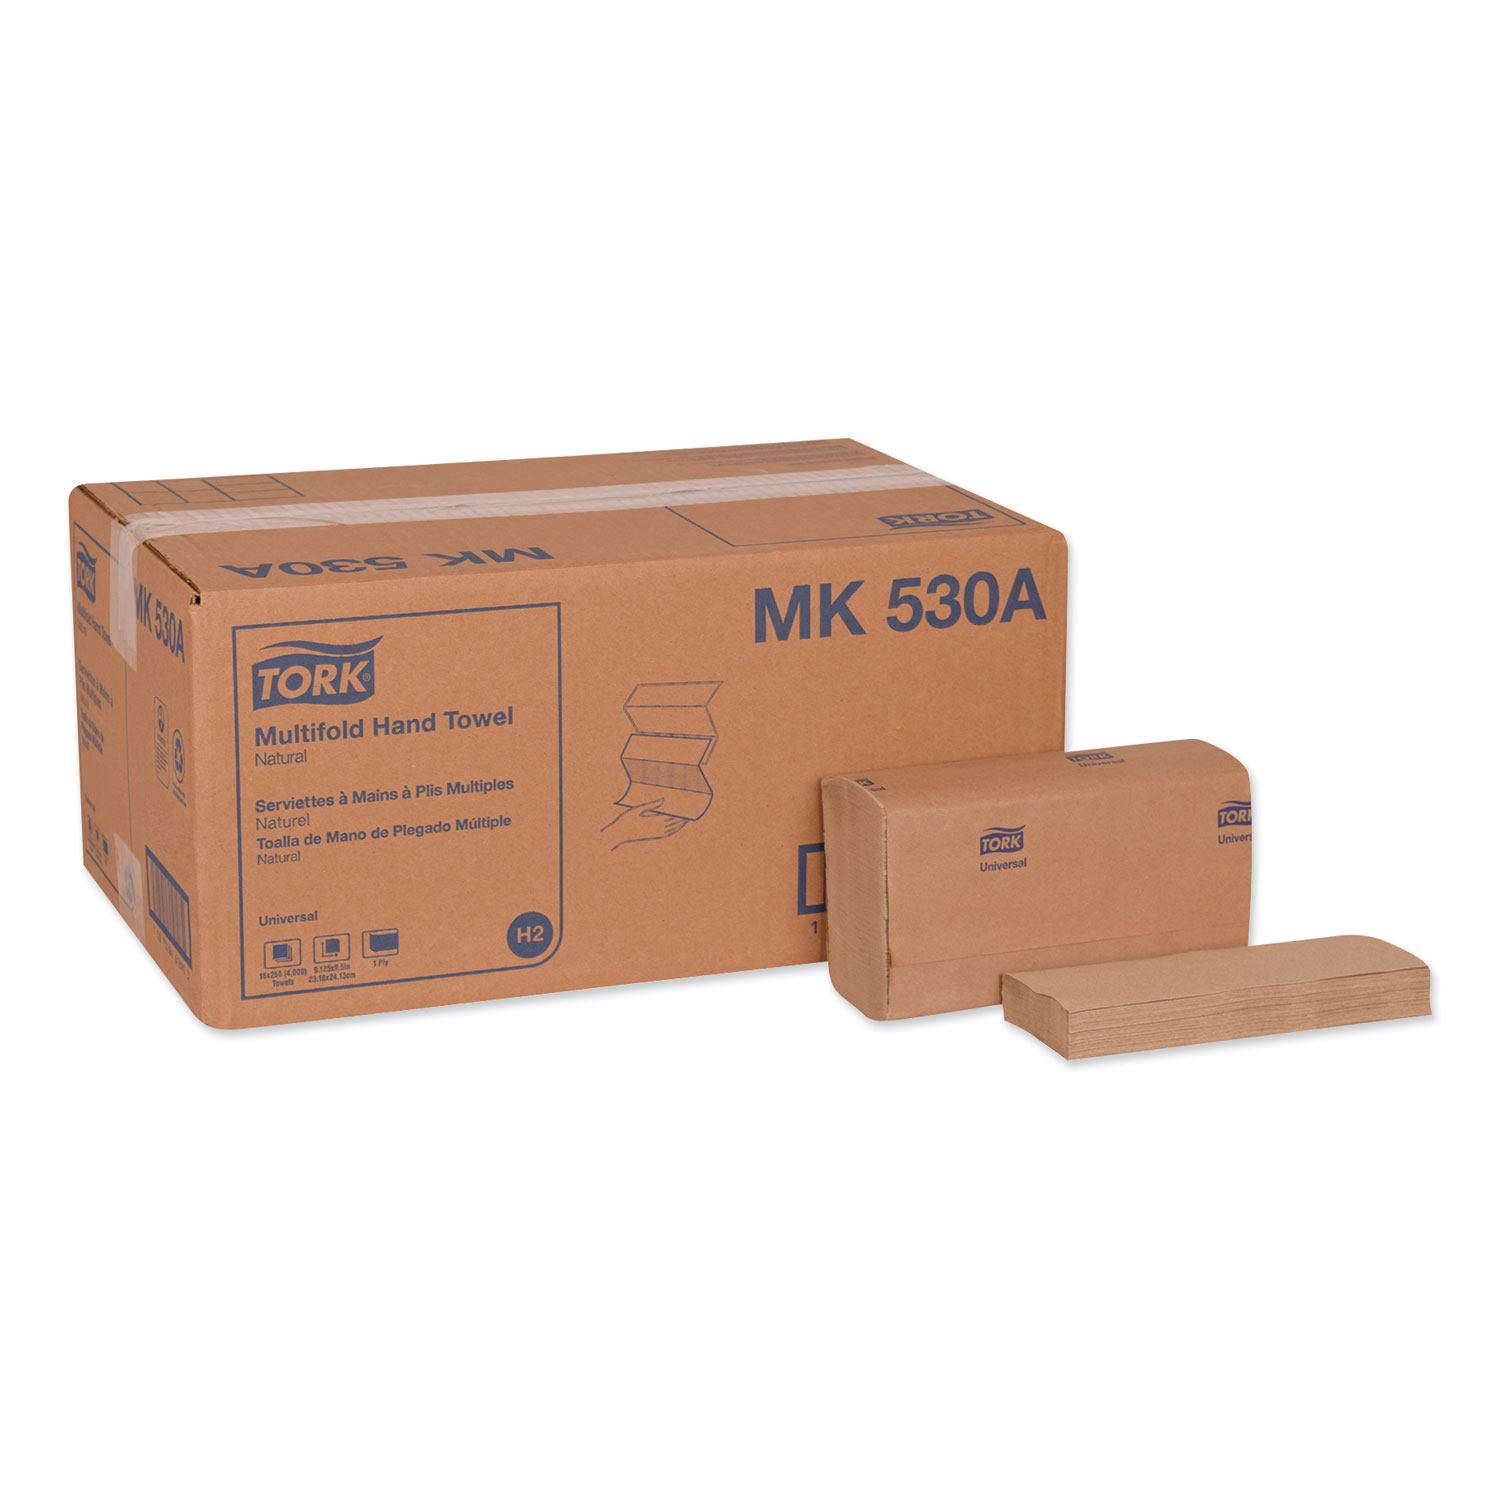  Tork MK530A Universal Multifold Hand Towel, 9.13 x 9.5, Natural, 250/Pack,16 Packs/Carton (TRKMK530A) 